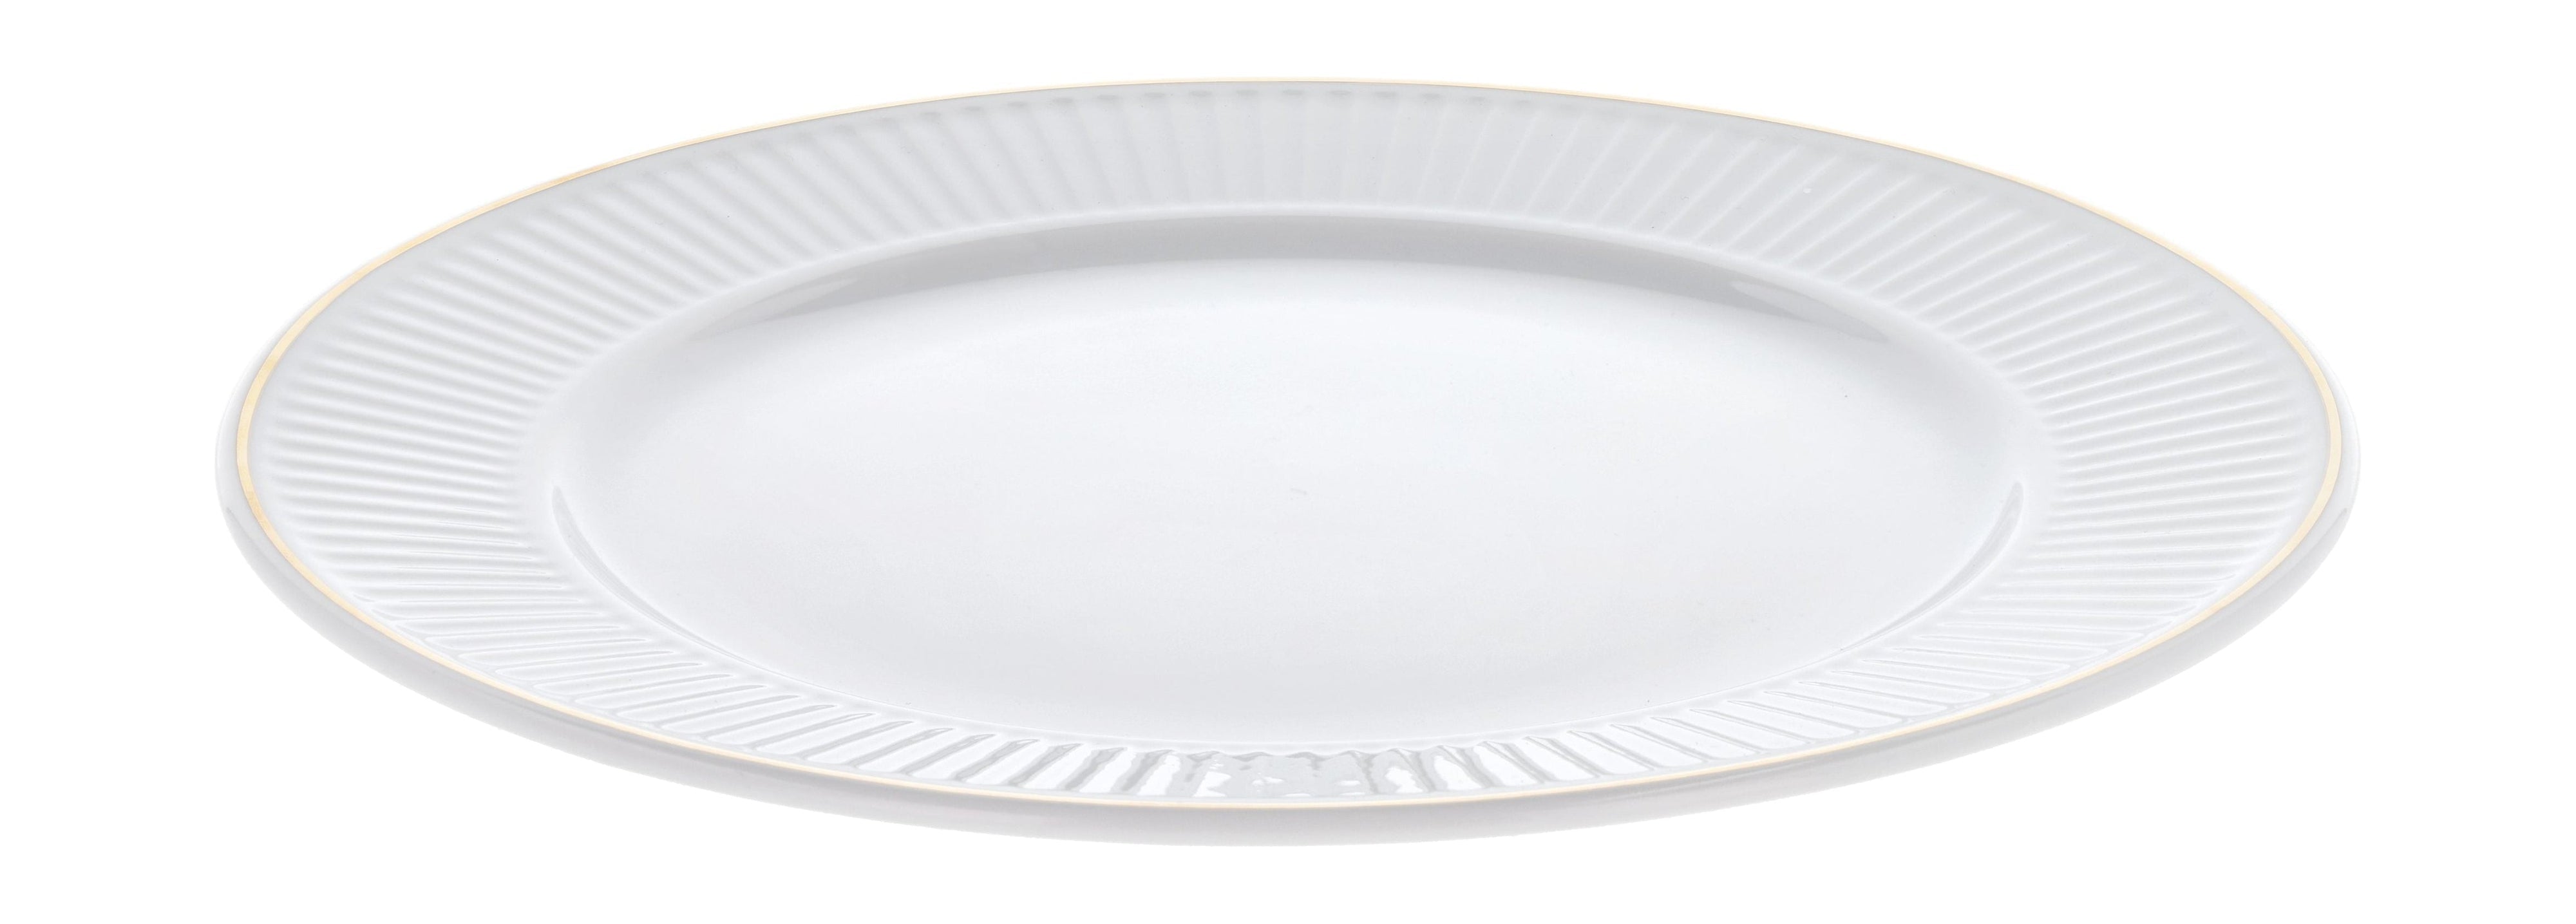 Pillivuyt plisse plato blanco/oro mate, Ø22 cm